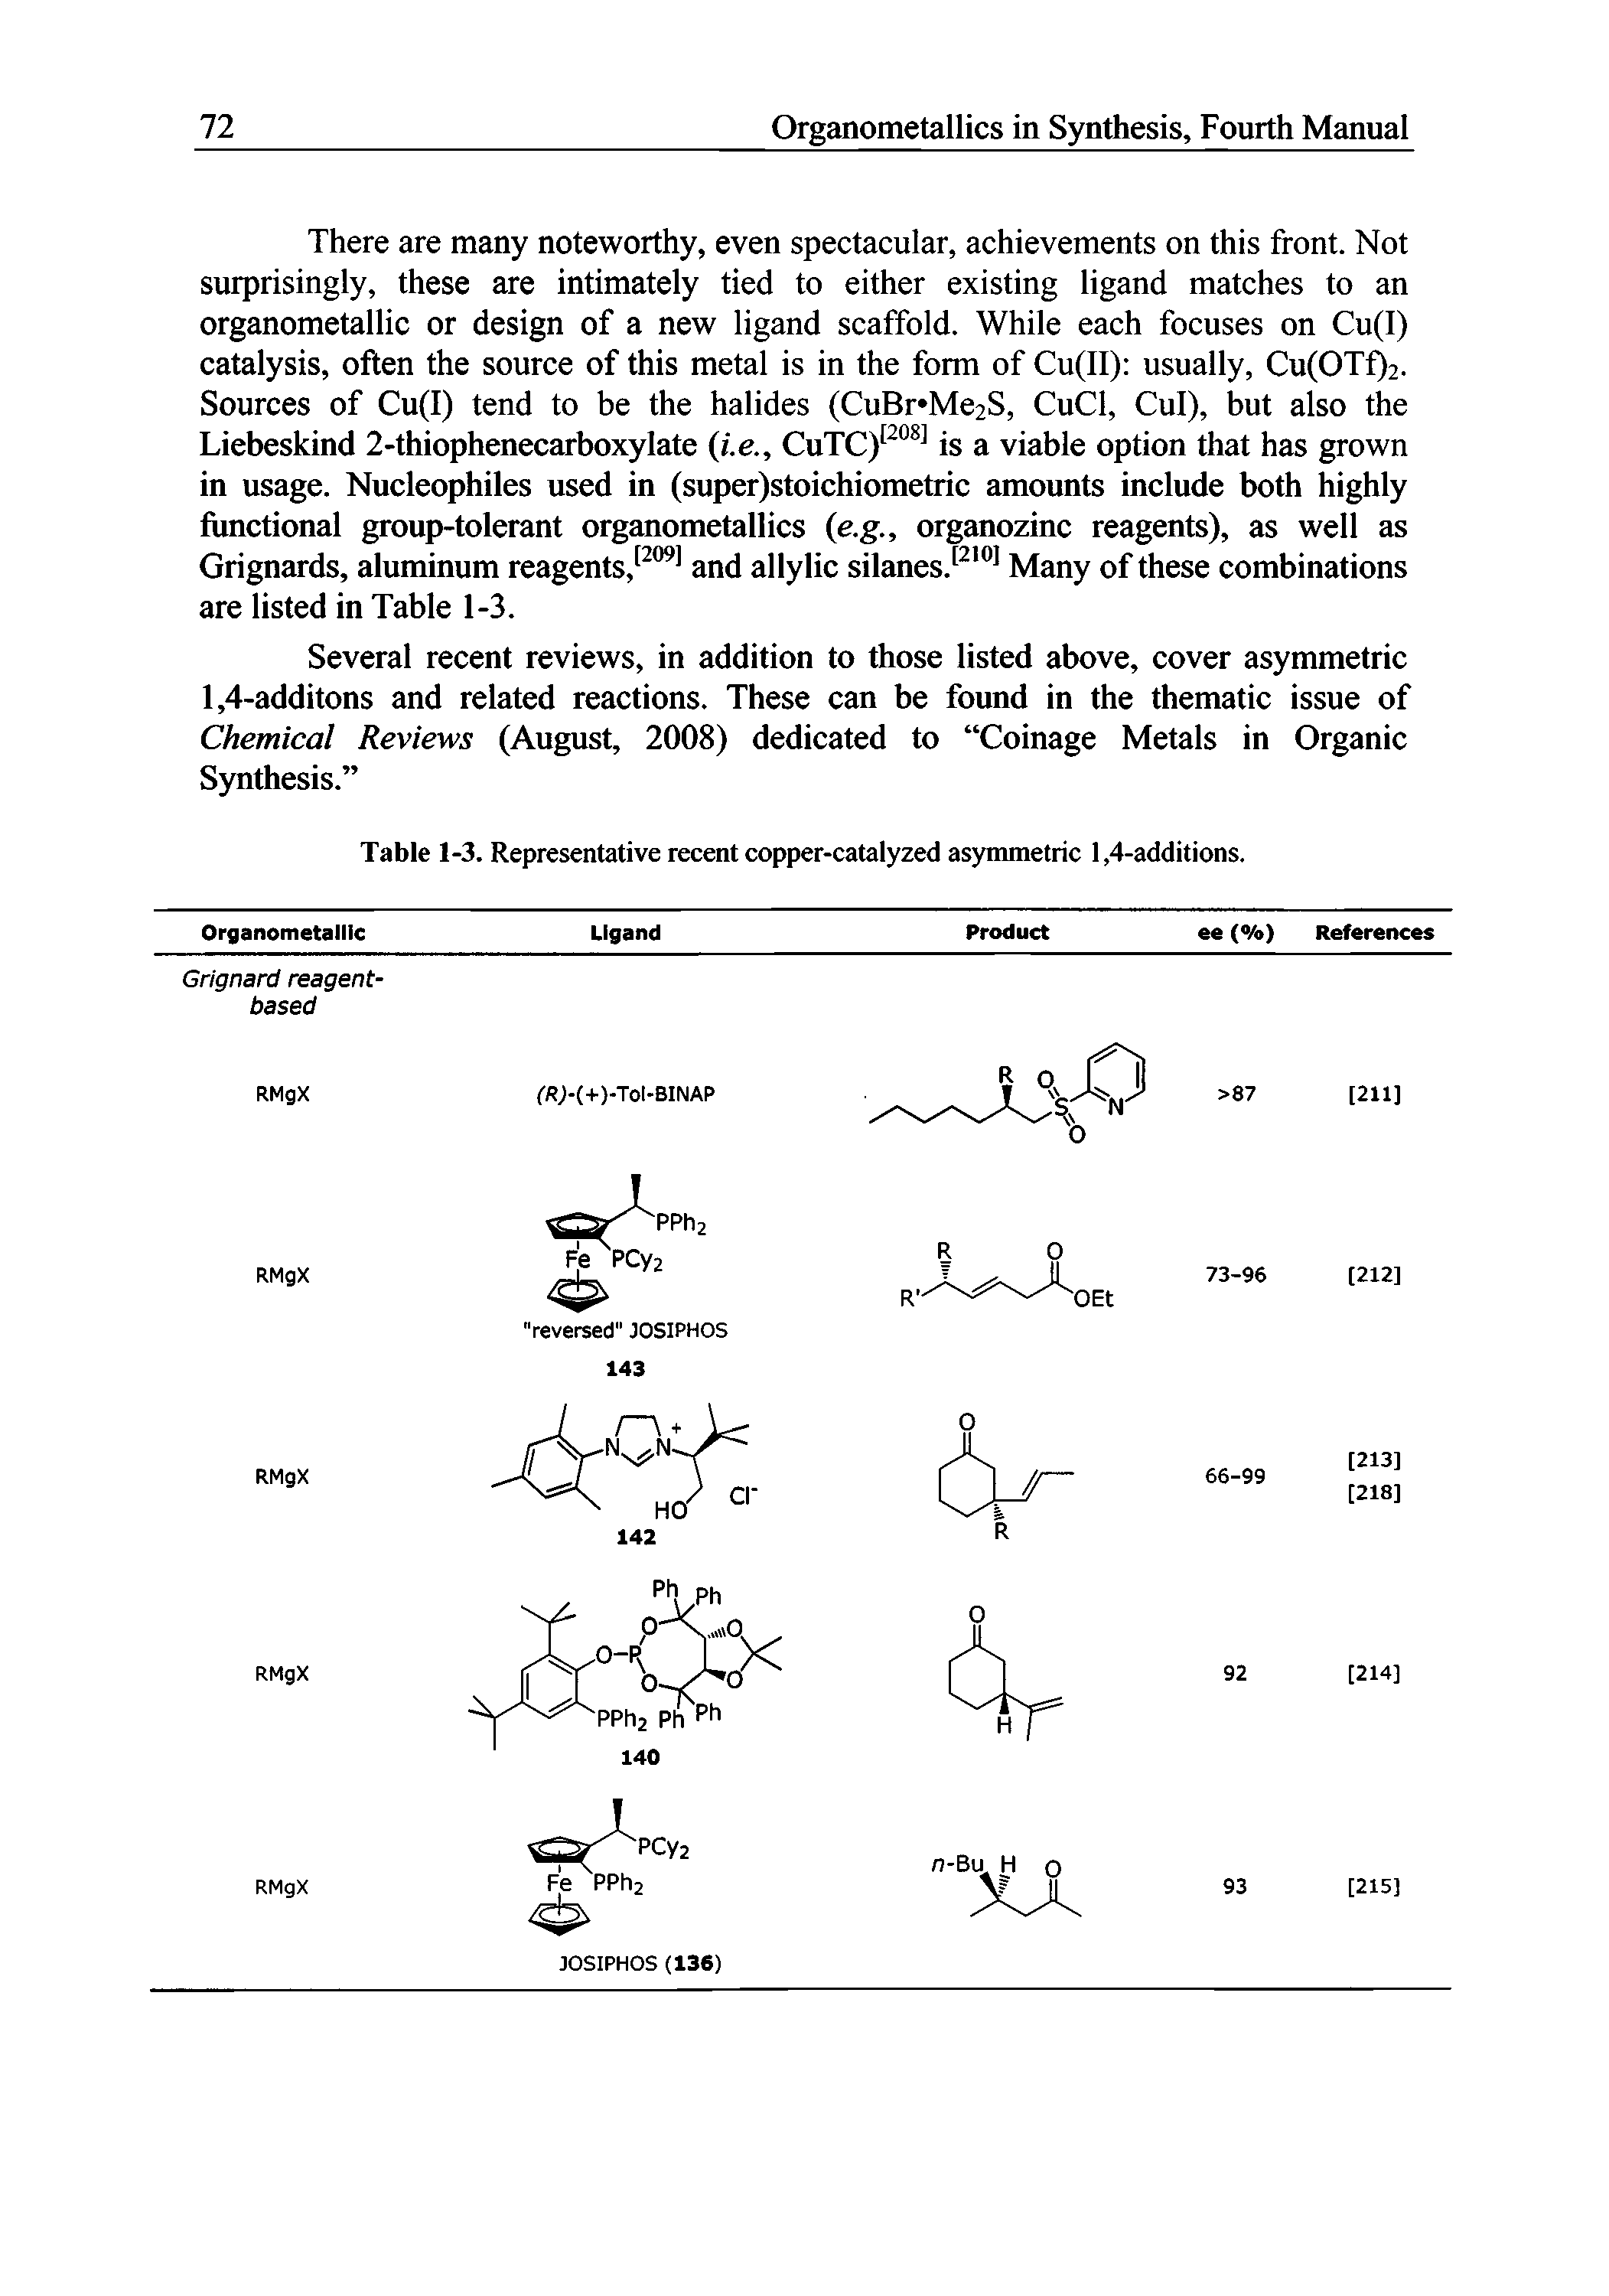 Table 1-3. Representative recent copper-catalyzed asymmetric 1,4-additions.